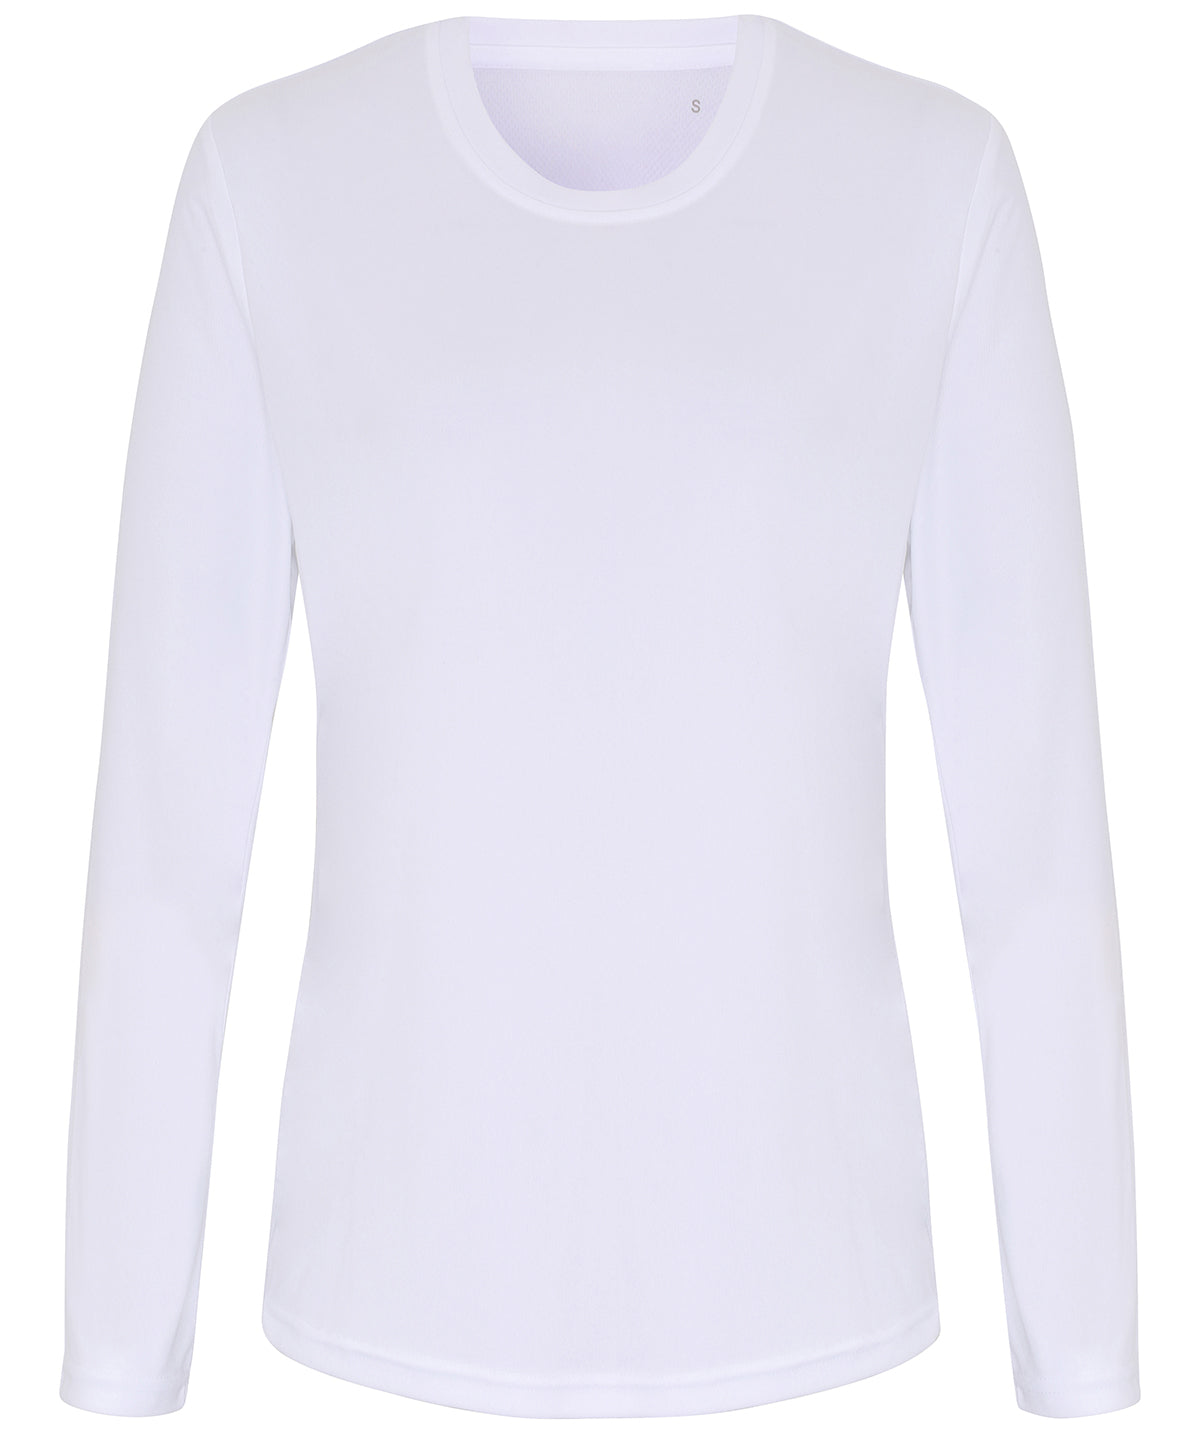 Stuttermabolir - Women's TriDri® Long Sleeve Performance T-shirt